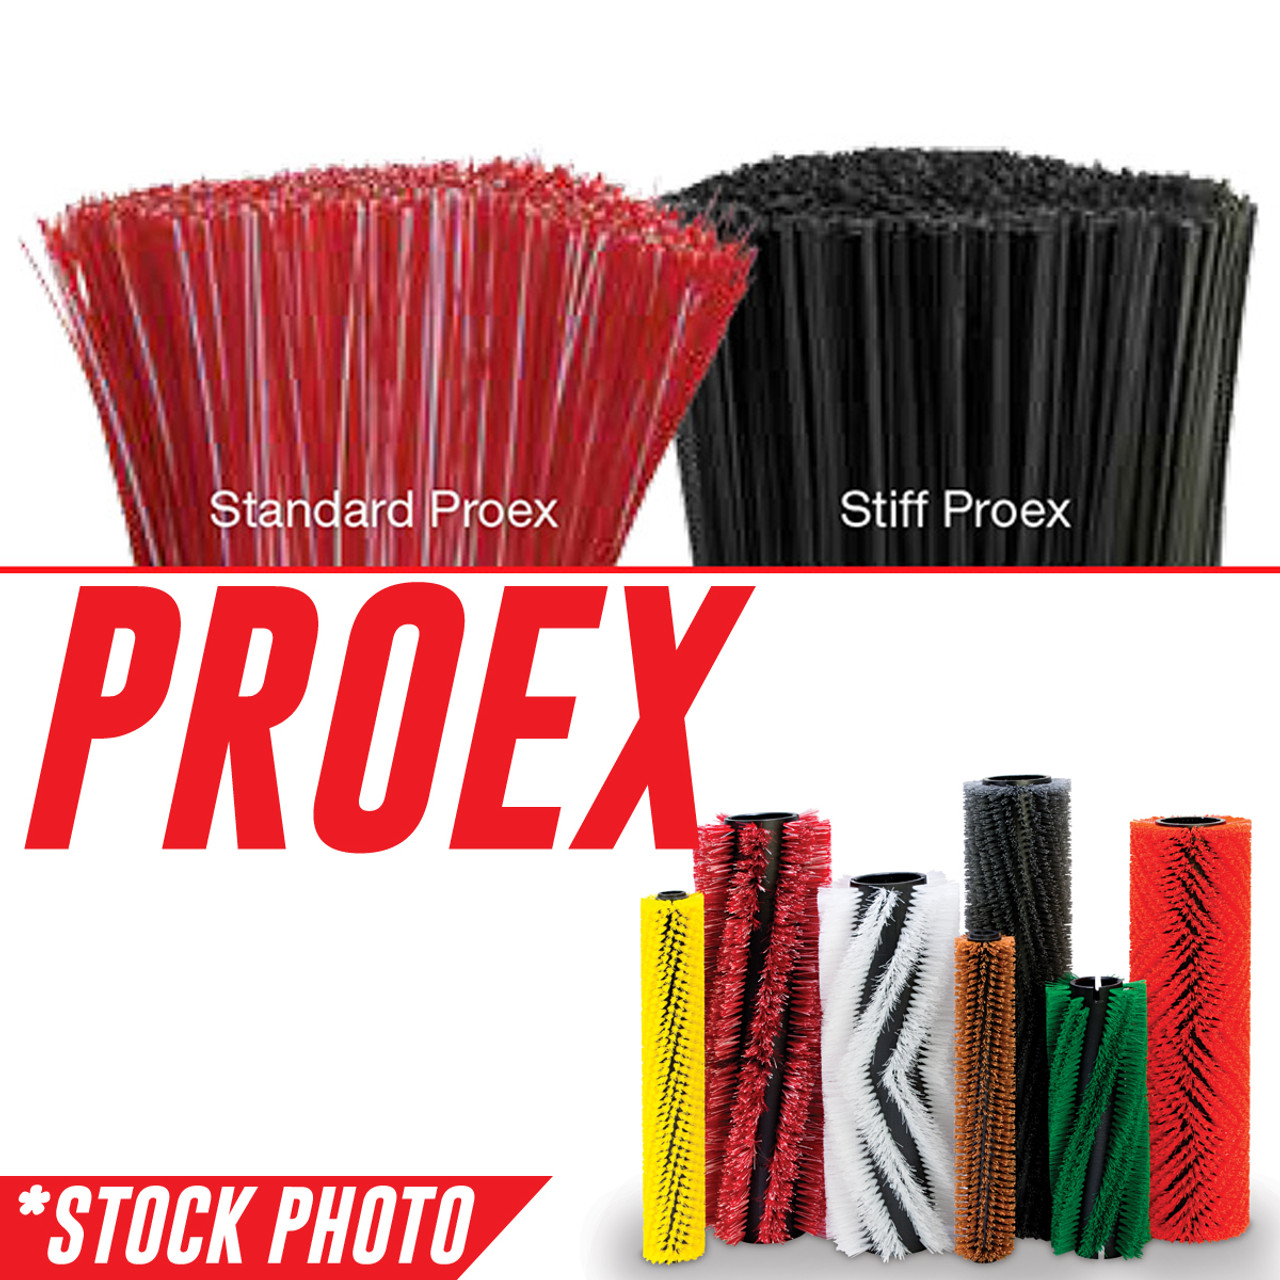 56505001: 36" Cylindrical Brush 6 Double Row Stiff Proex  fits Advance-Nilfisk Models 1300, 2052, 5000, 5010, 5015